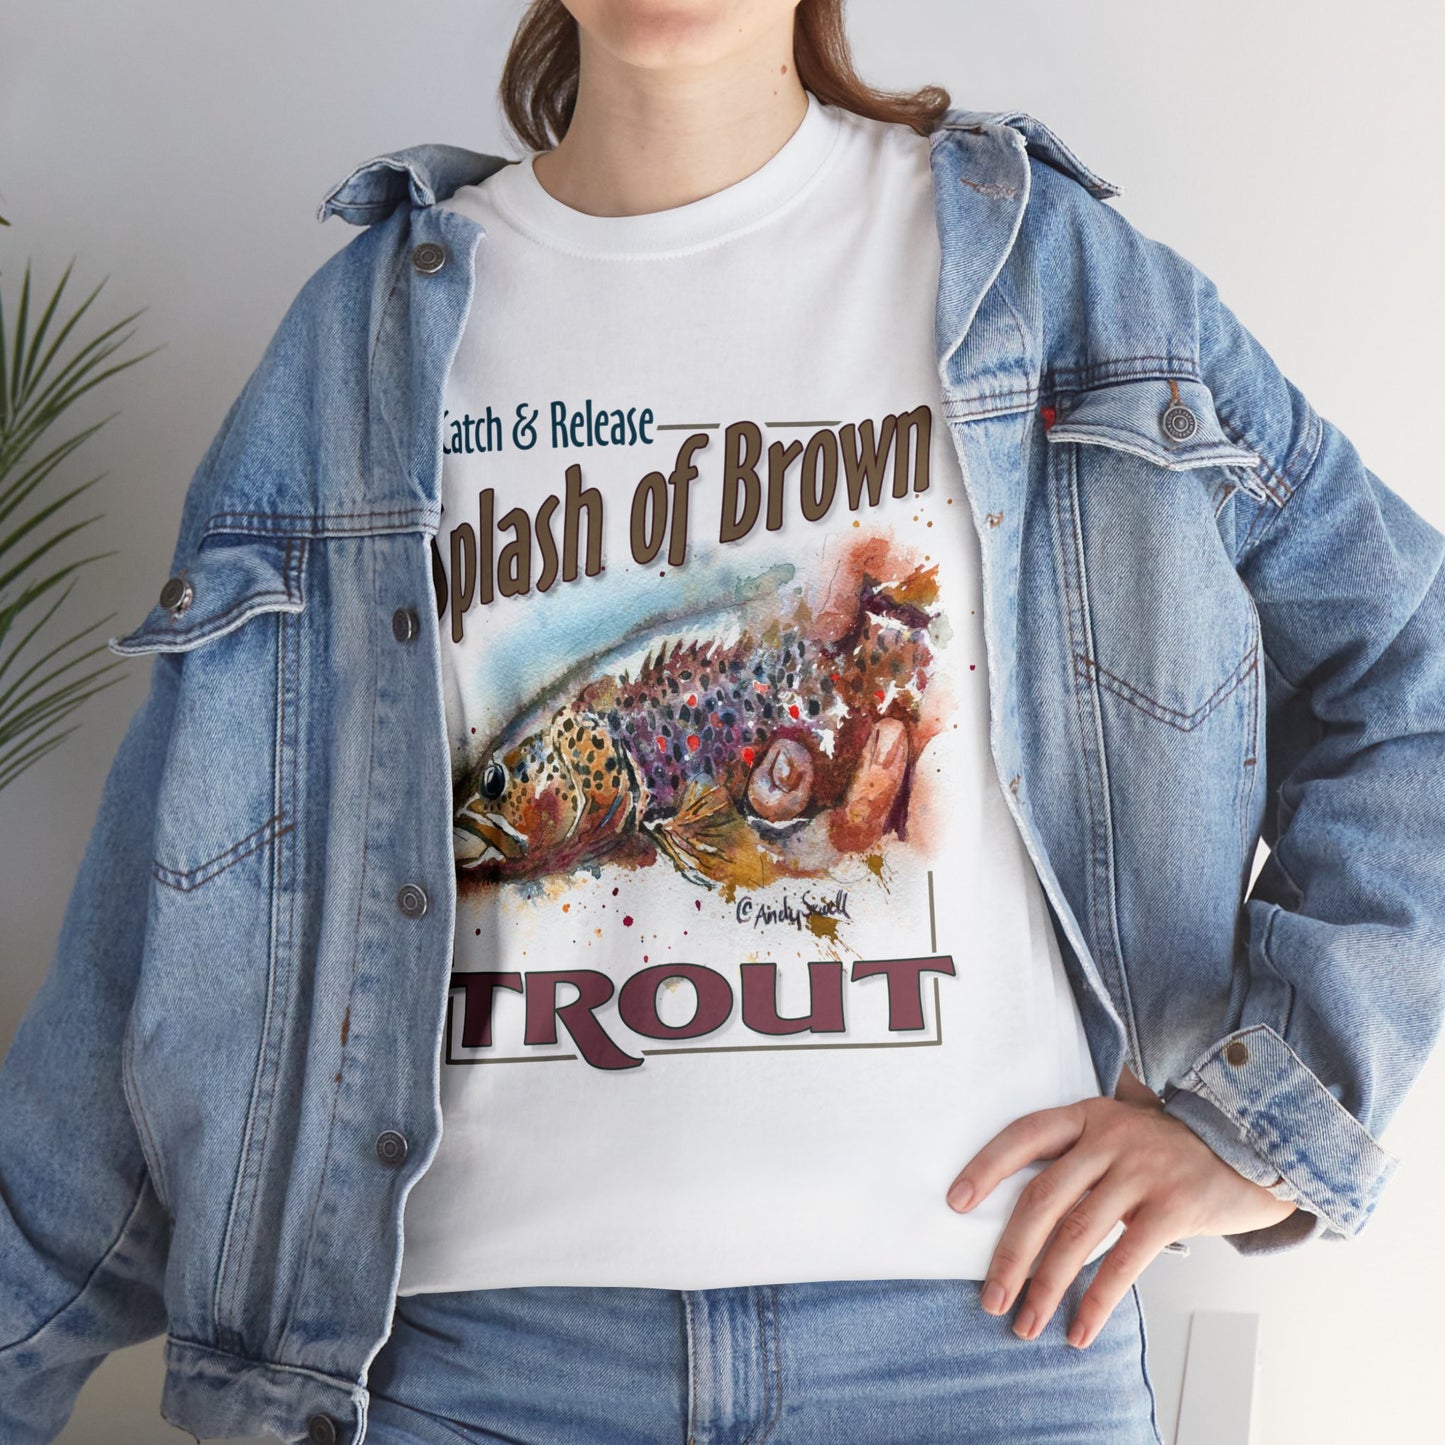 "Splash of Brown: Trout" Unisex Heavy Cotton Tee